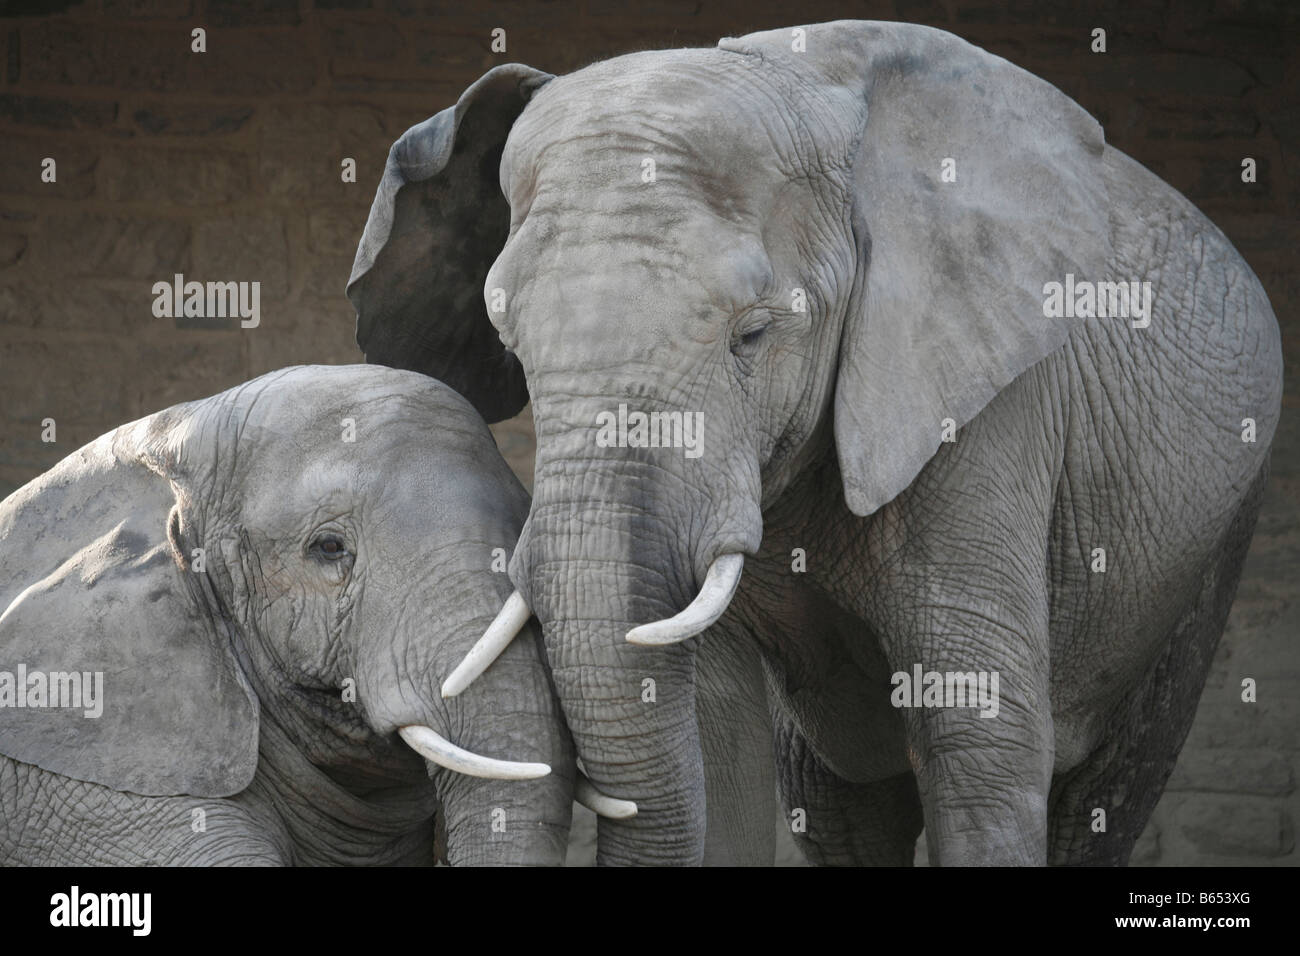 giant elephant cuddler